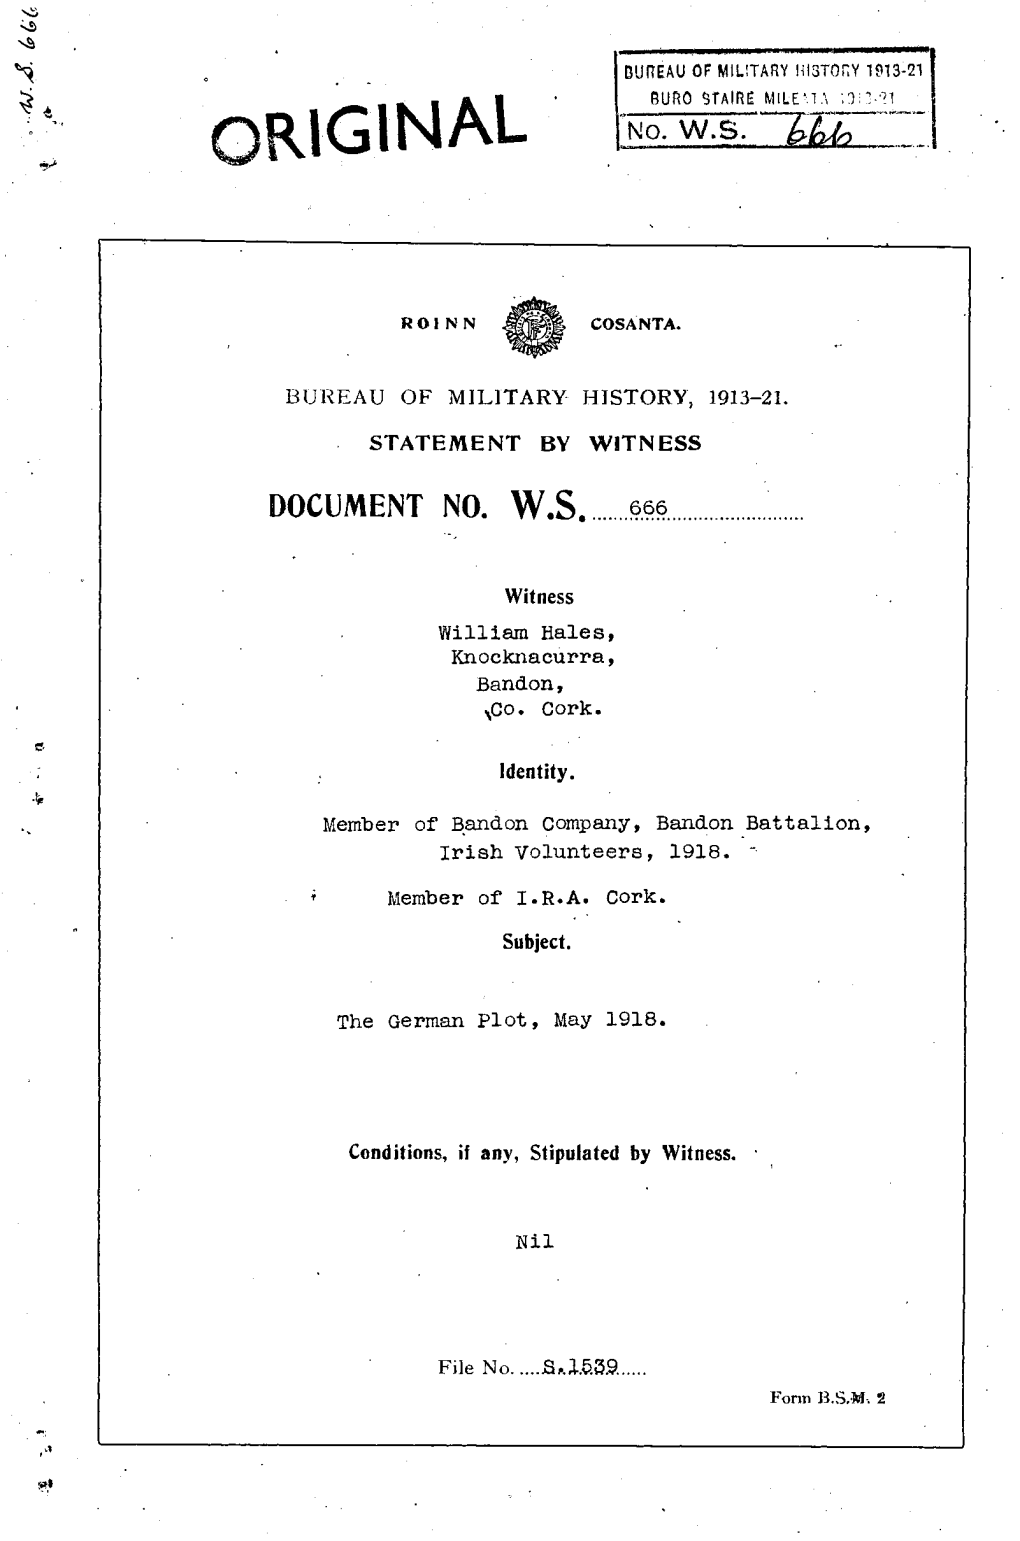 ROINN COSANTA. BUREAU of MILITARY HISTORY, 1913-21. STATEMENT by WITNESS DOCUMENT NO. W.S. 666 Witness William Hales, Knocknacur